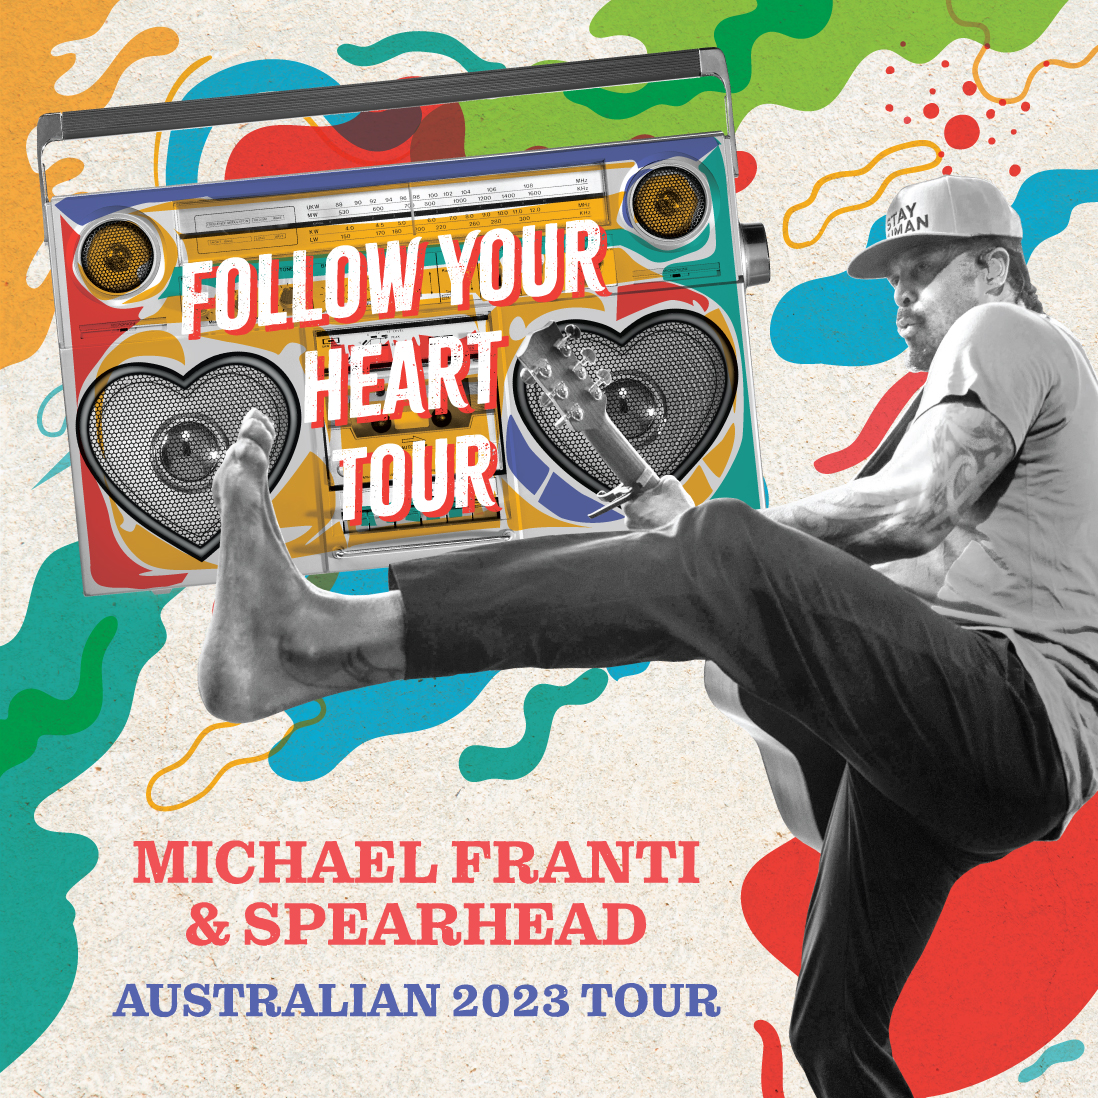 FOLLOW YOUR HEART AUSTRALIA TOUR DATES ANNOUNCED!